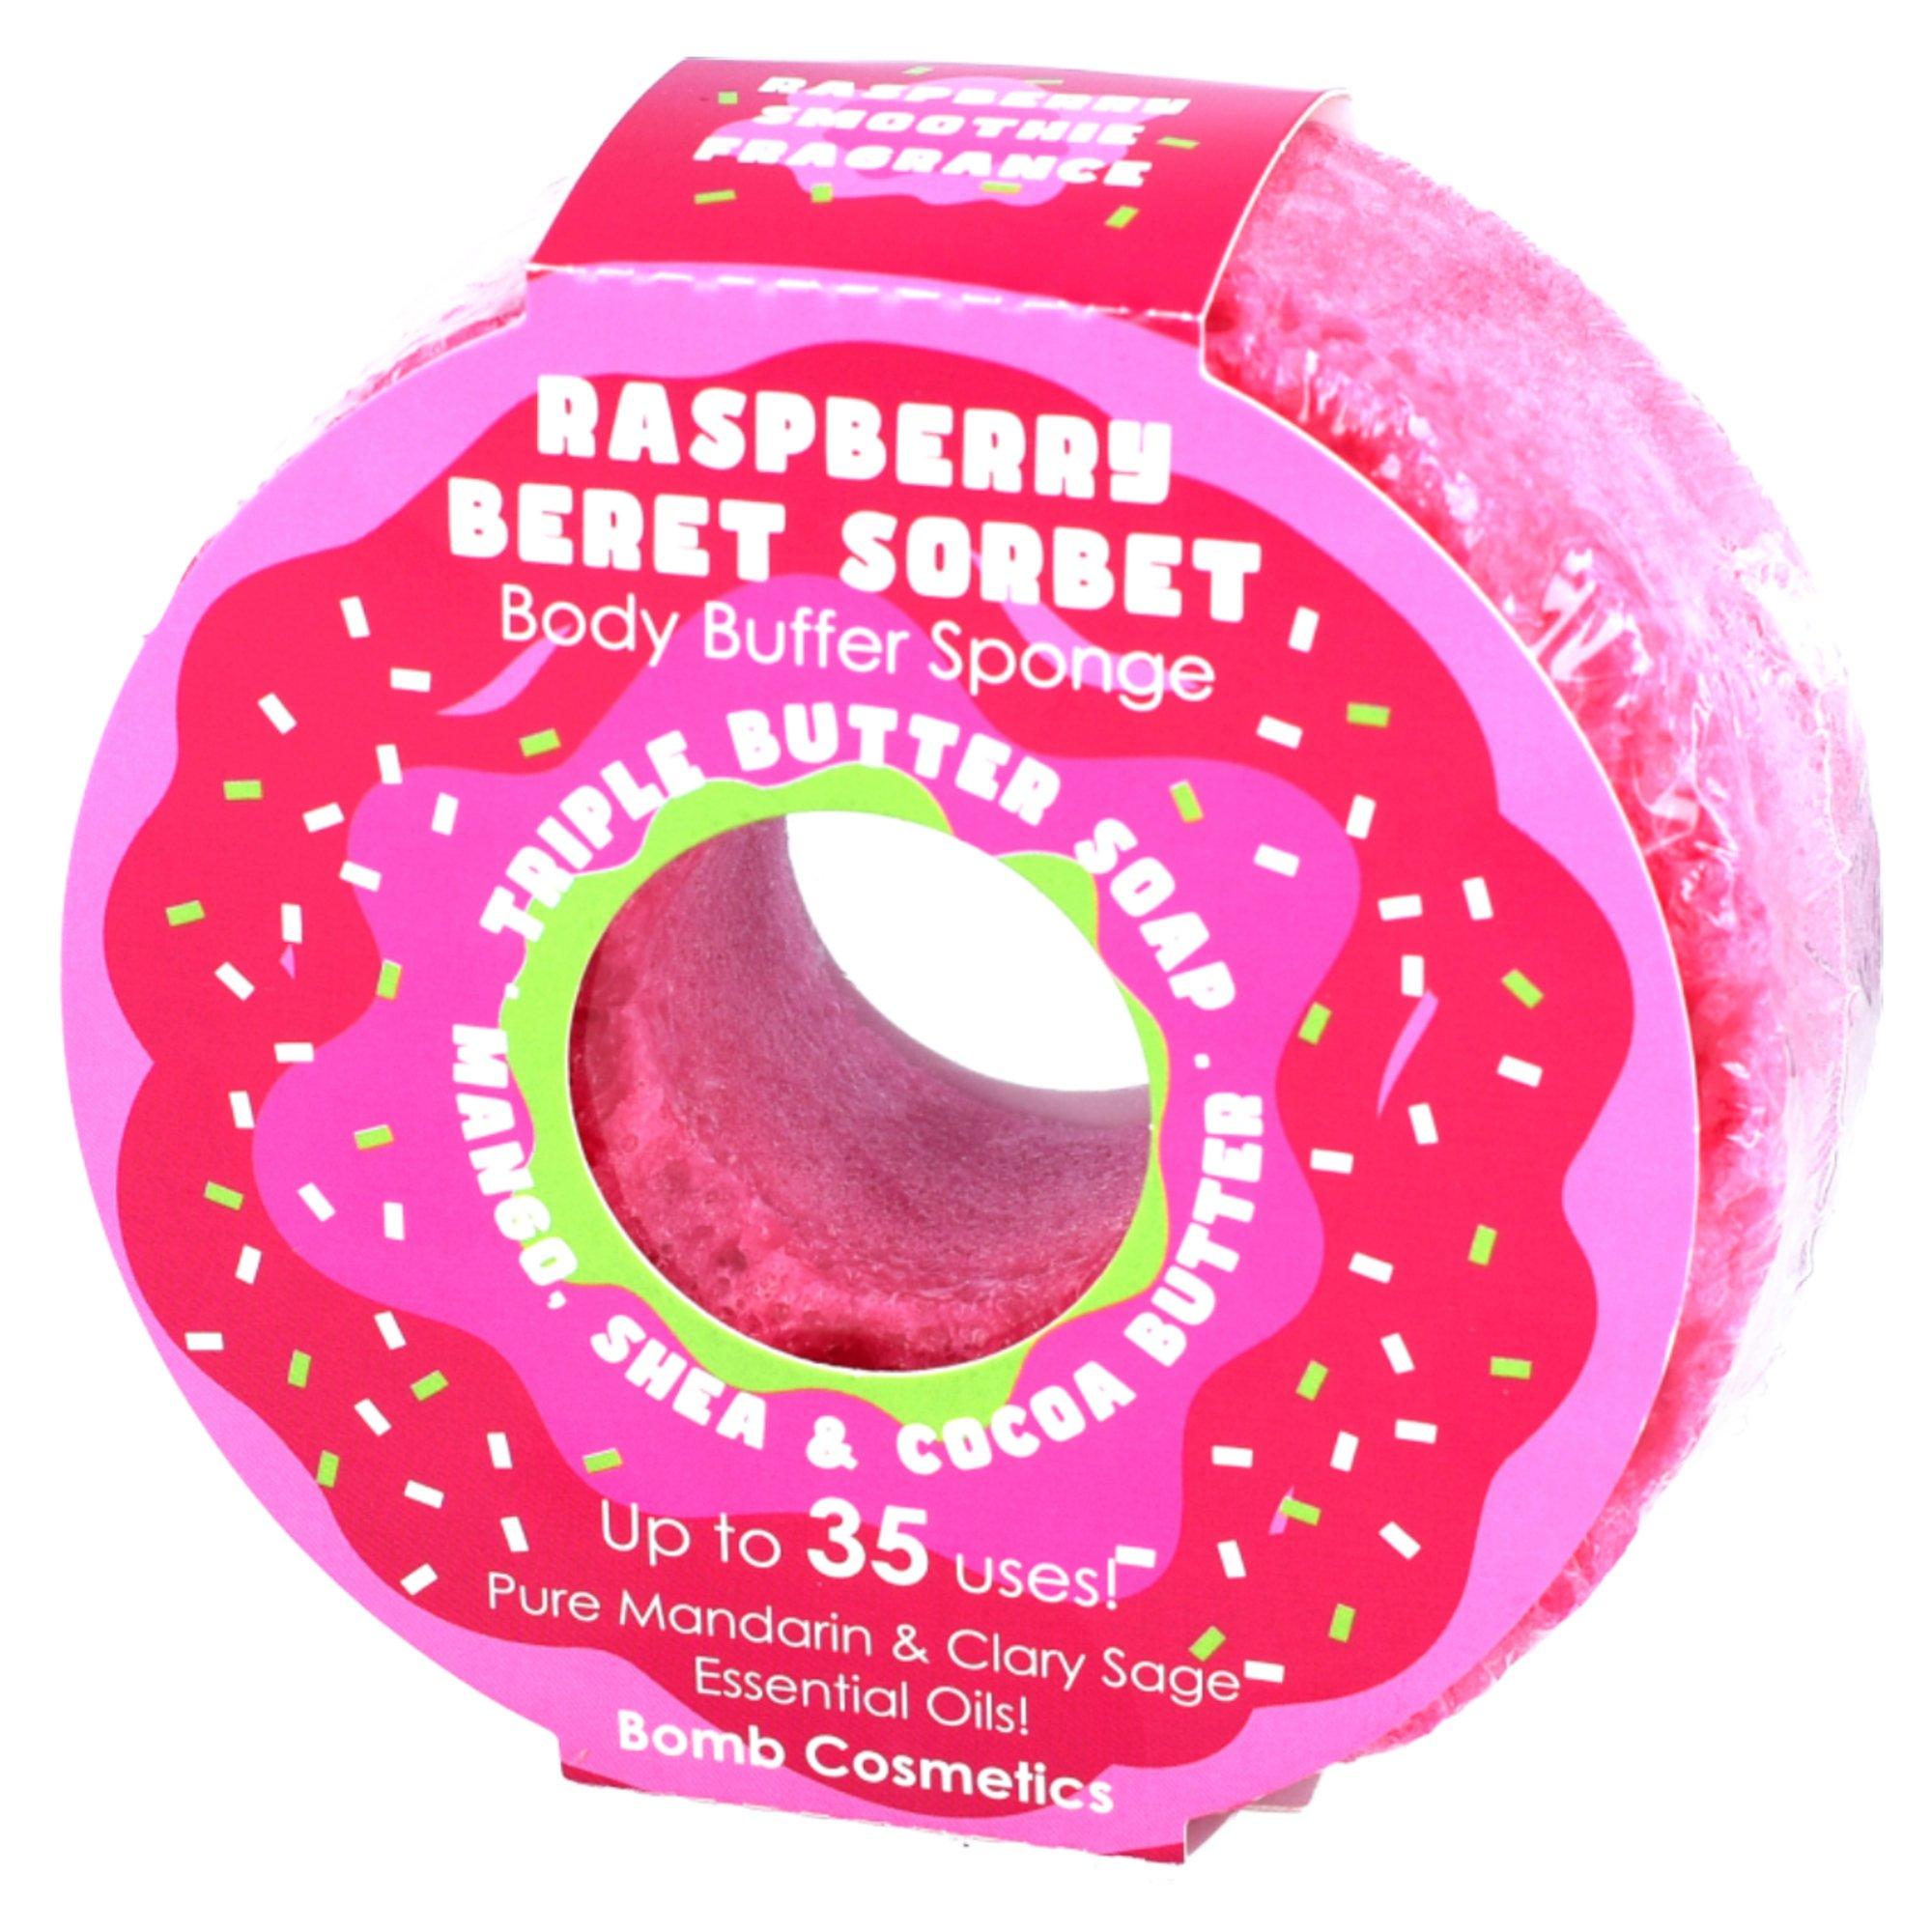 Bomb Cosmetics Raspberry Beret Sorbet Body Buffer Sponge